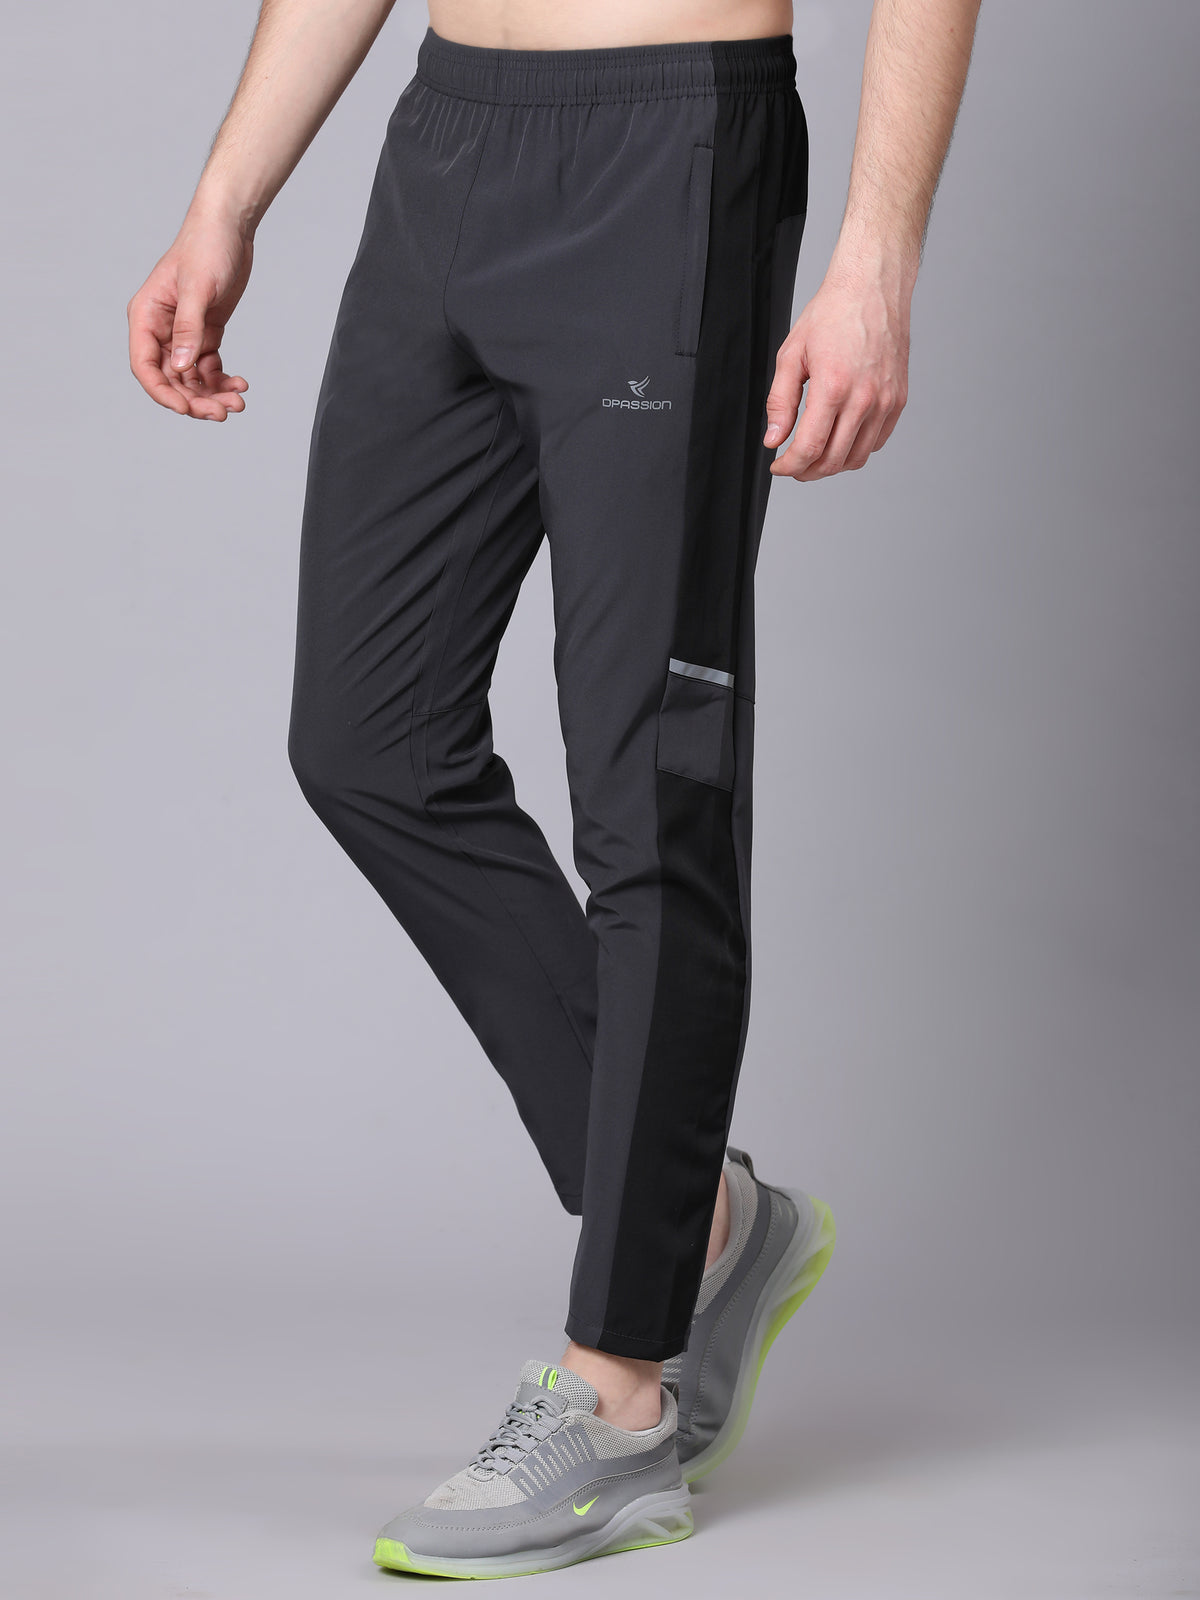 Dpassion NS Lycra Regular fit Running Track Pant for Mens